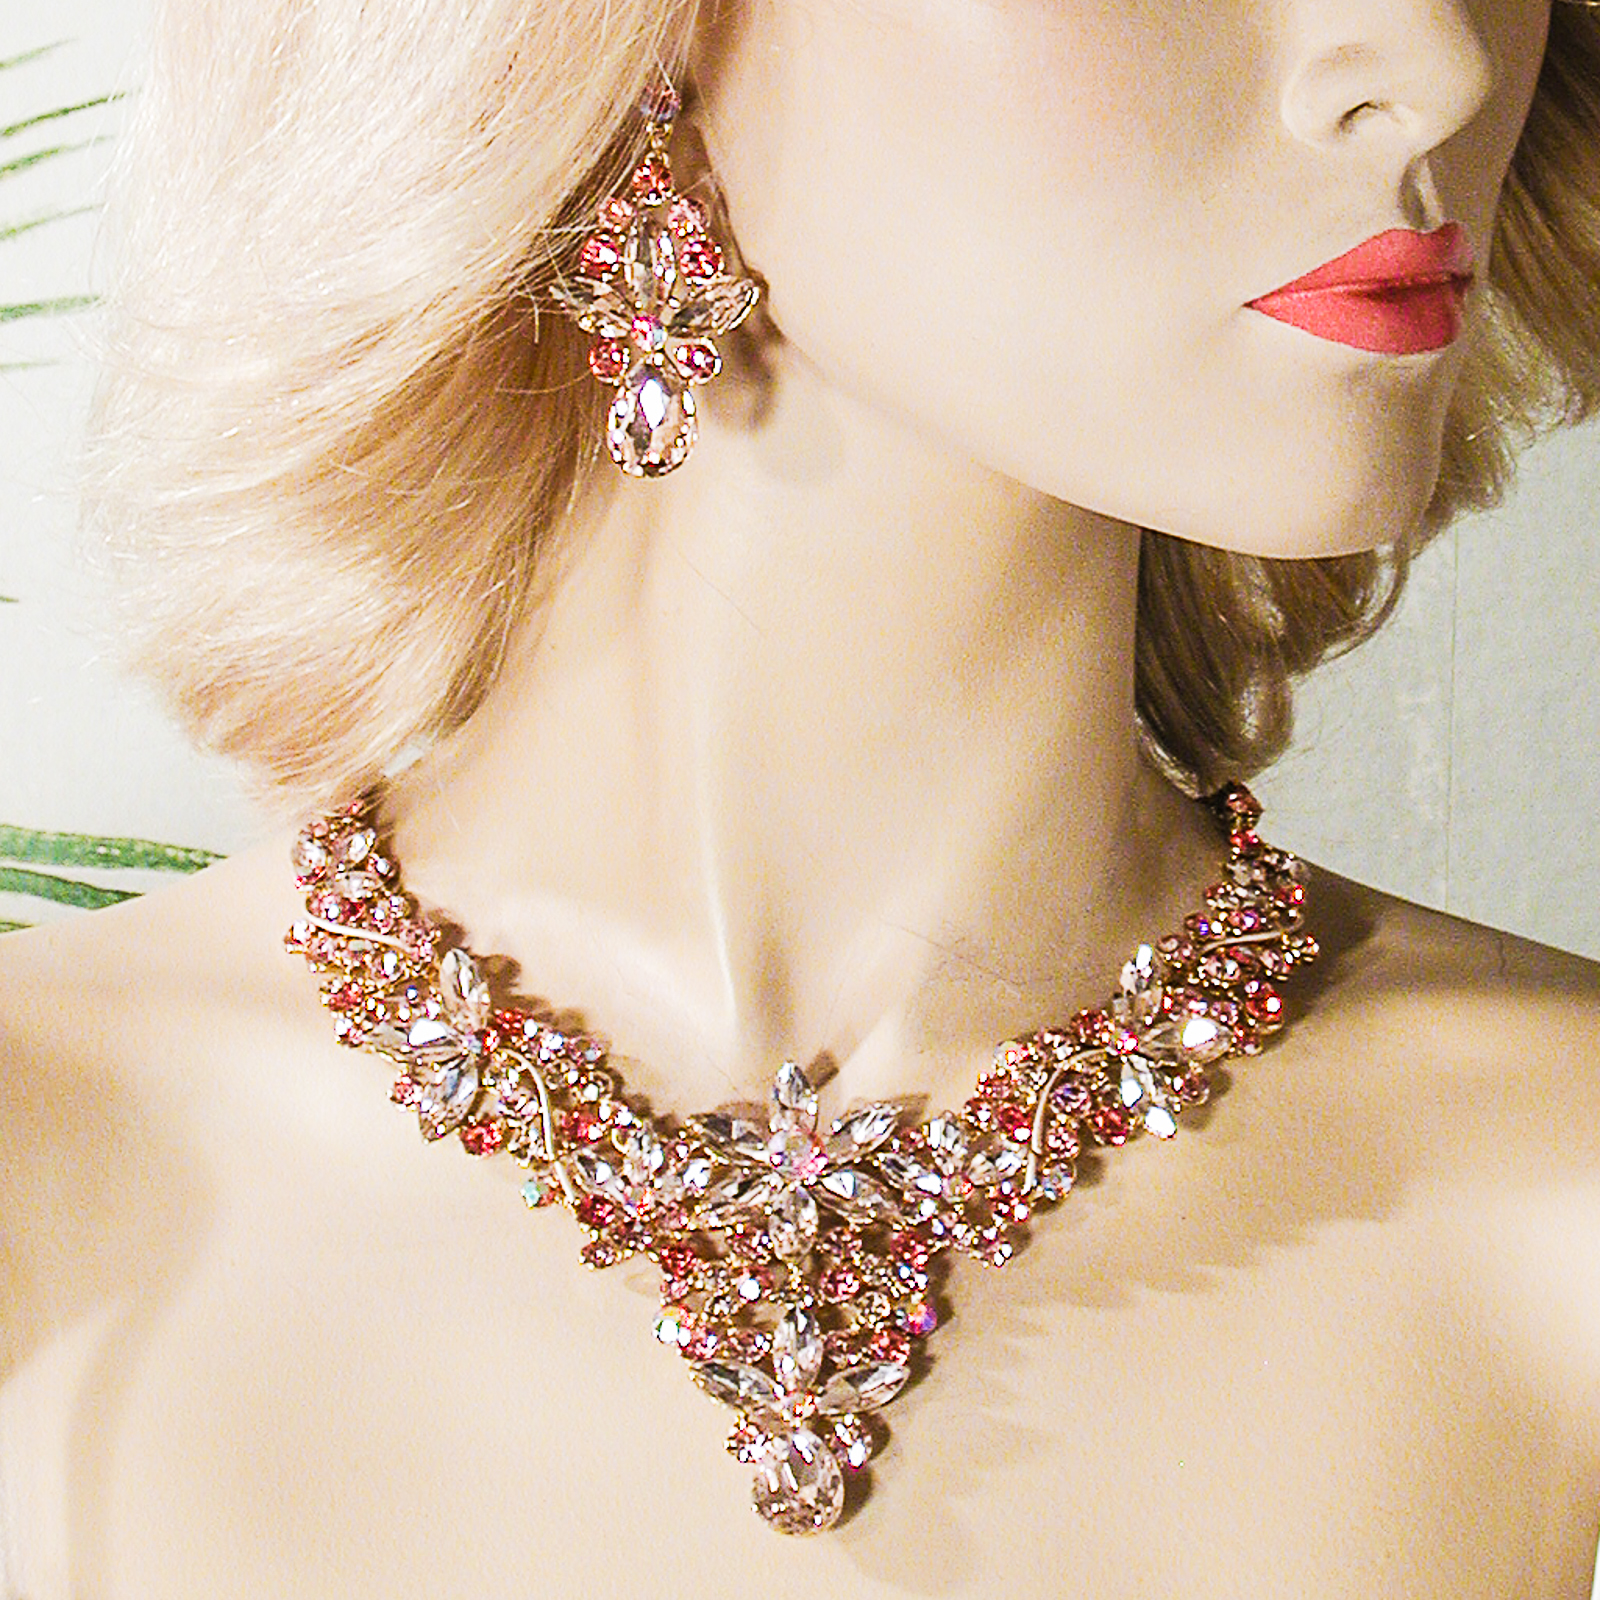 Brilliant Red Crystal Rhinestone Bib Necklace Earring Set, a fashion accessorie - Evening Elegance